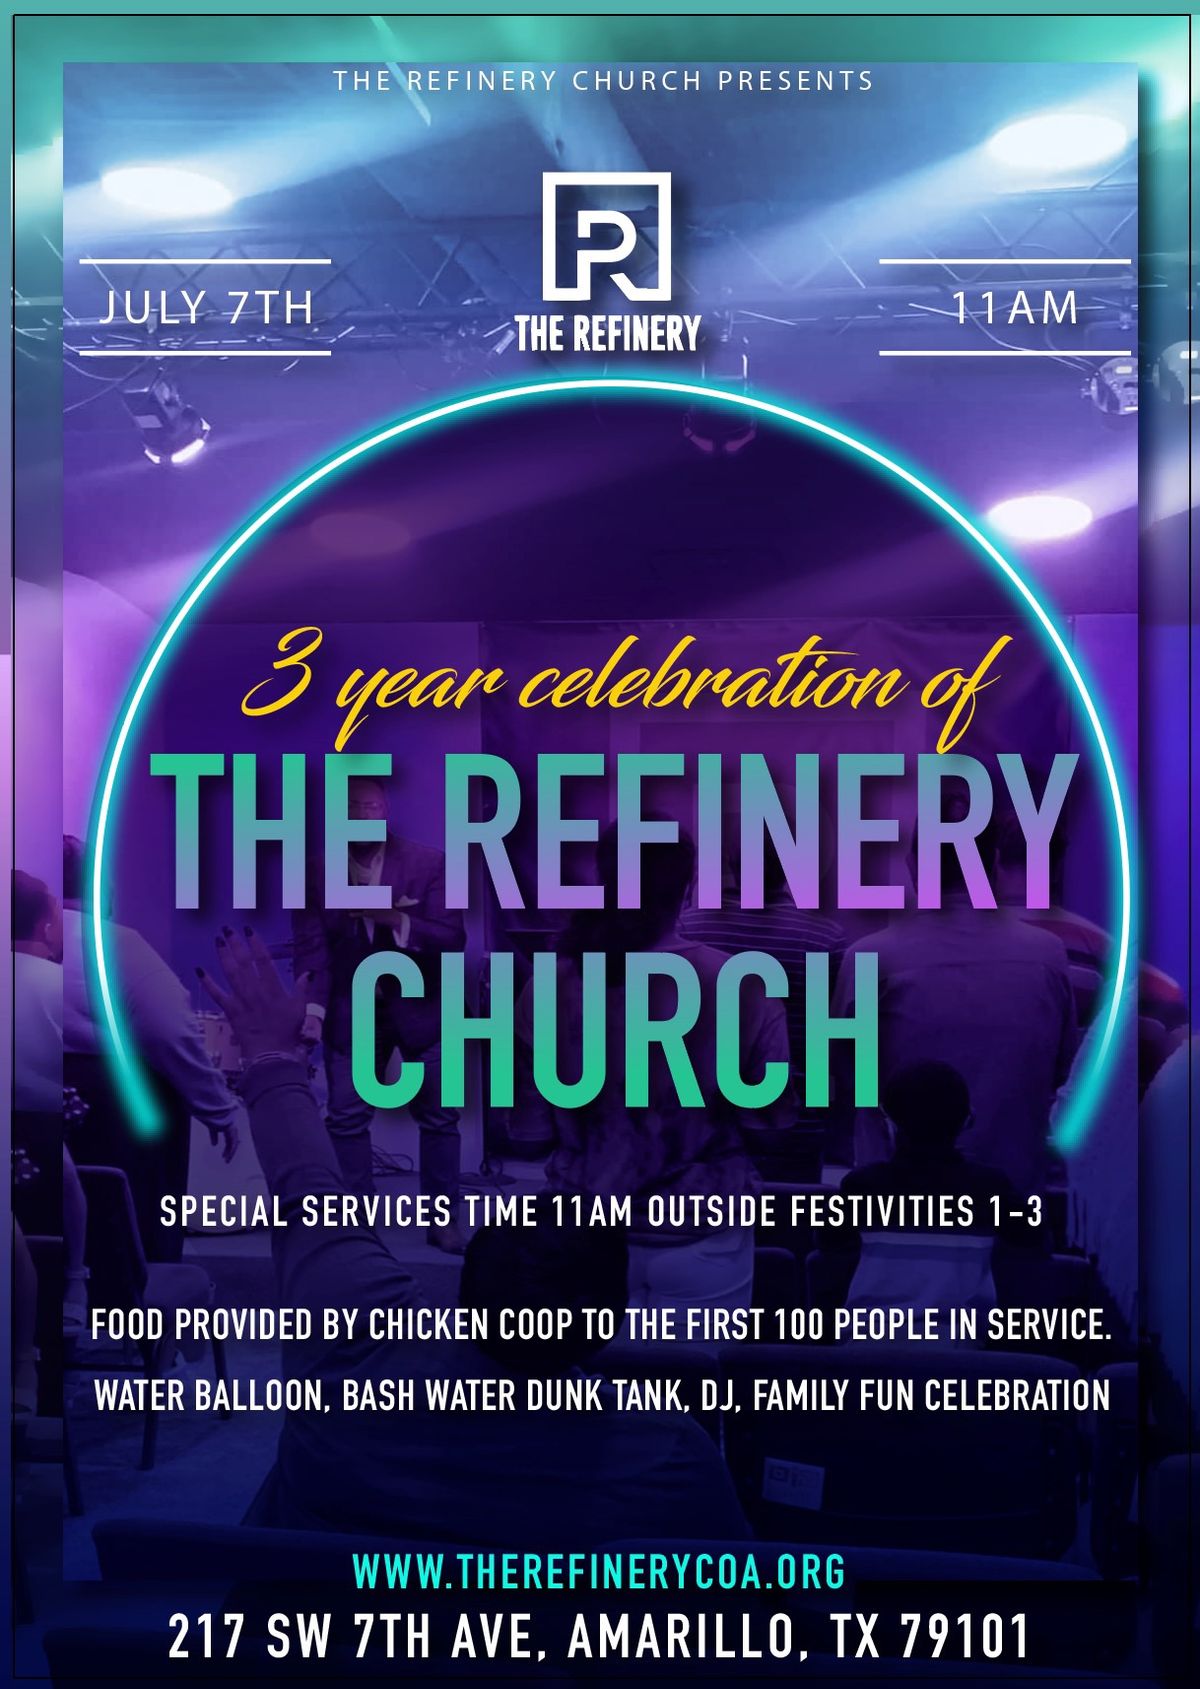 The Refinery Church of Amarillo's 3rd Anniversary Celebration